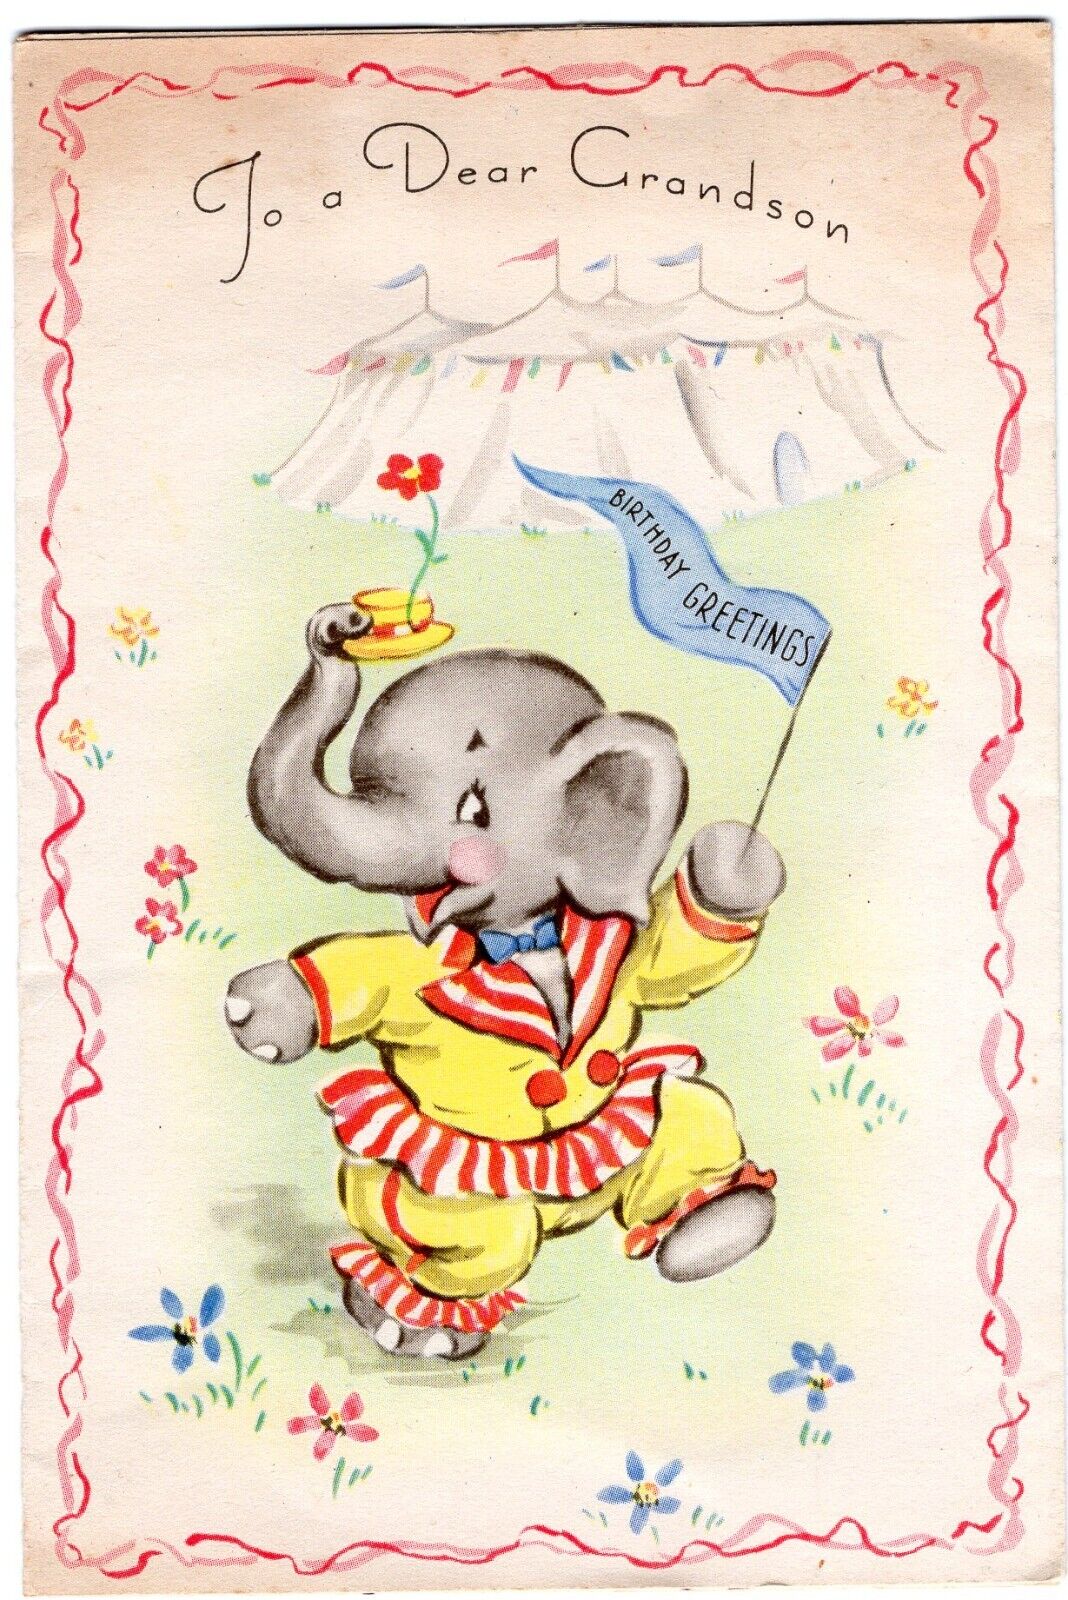 Rust Craft Vintage Anthropomorphic  Circus Elephant for Grandson   Birthday Card